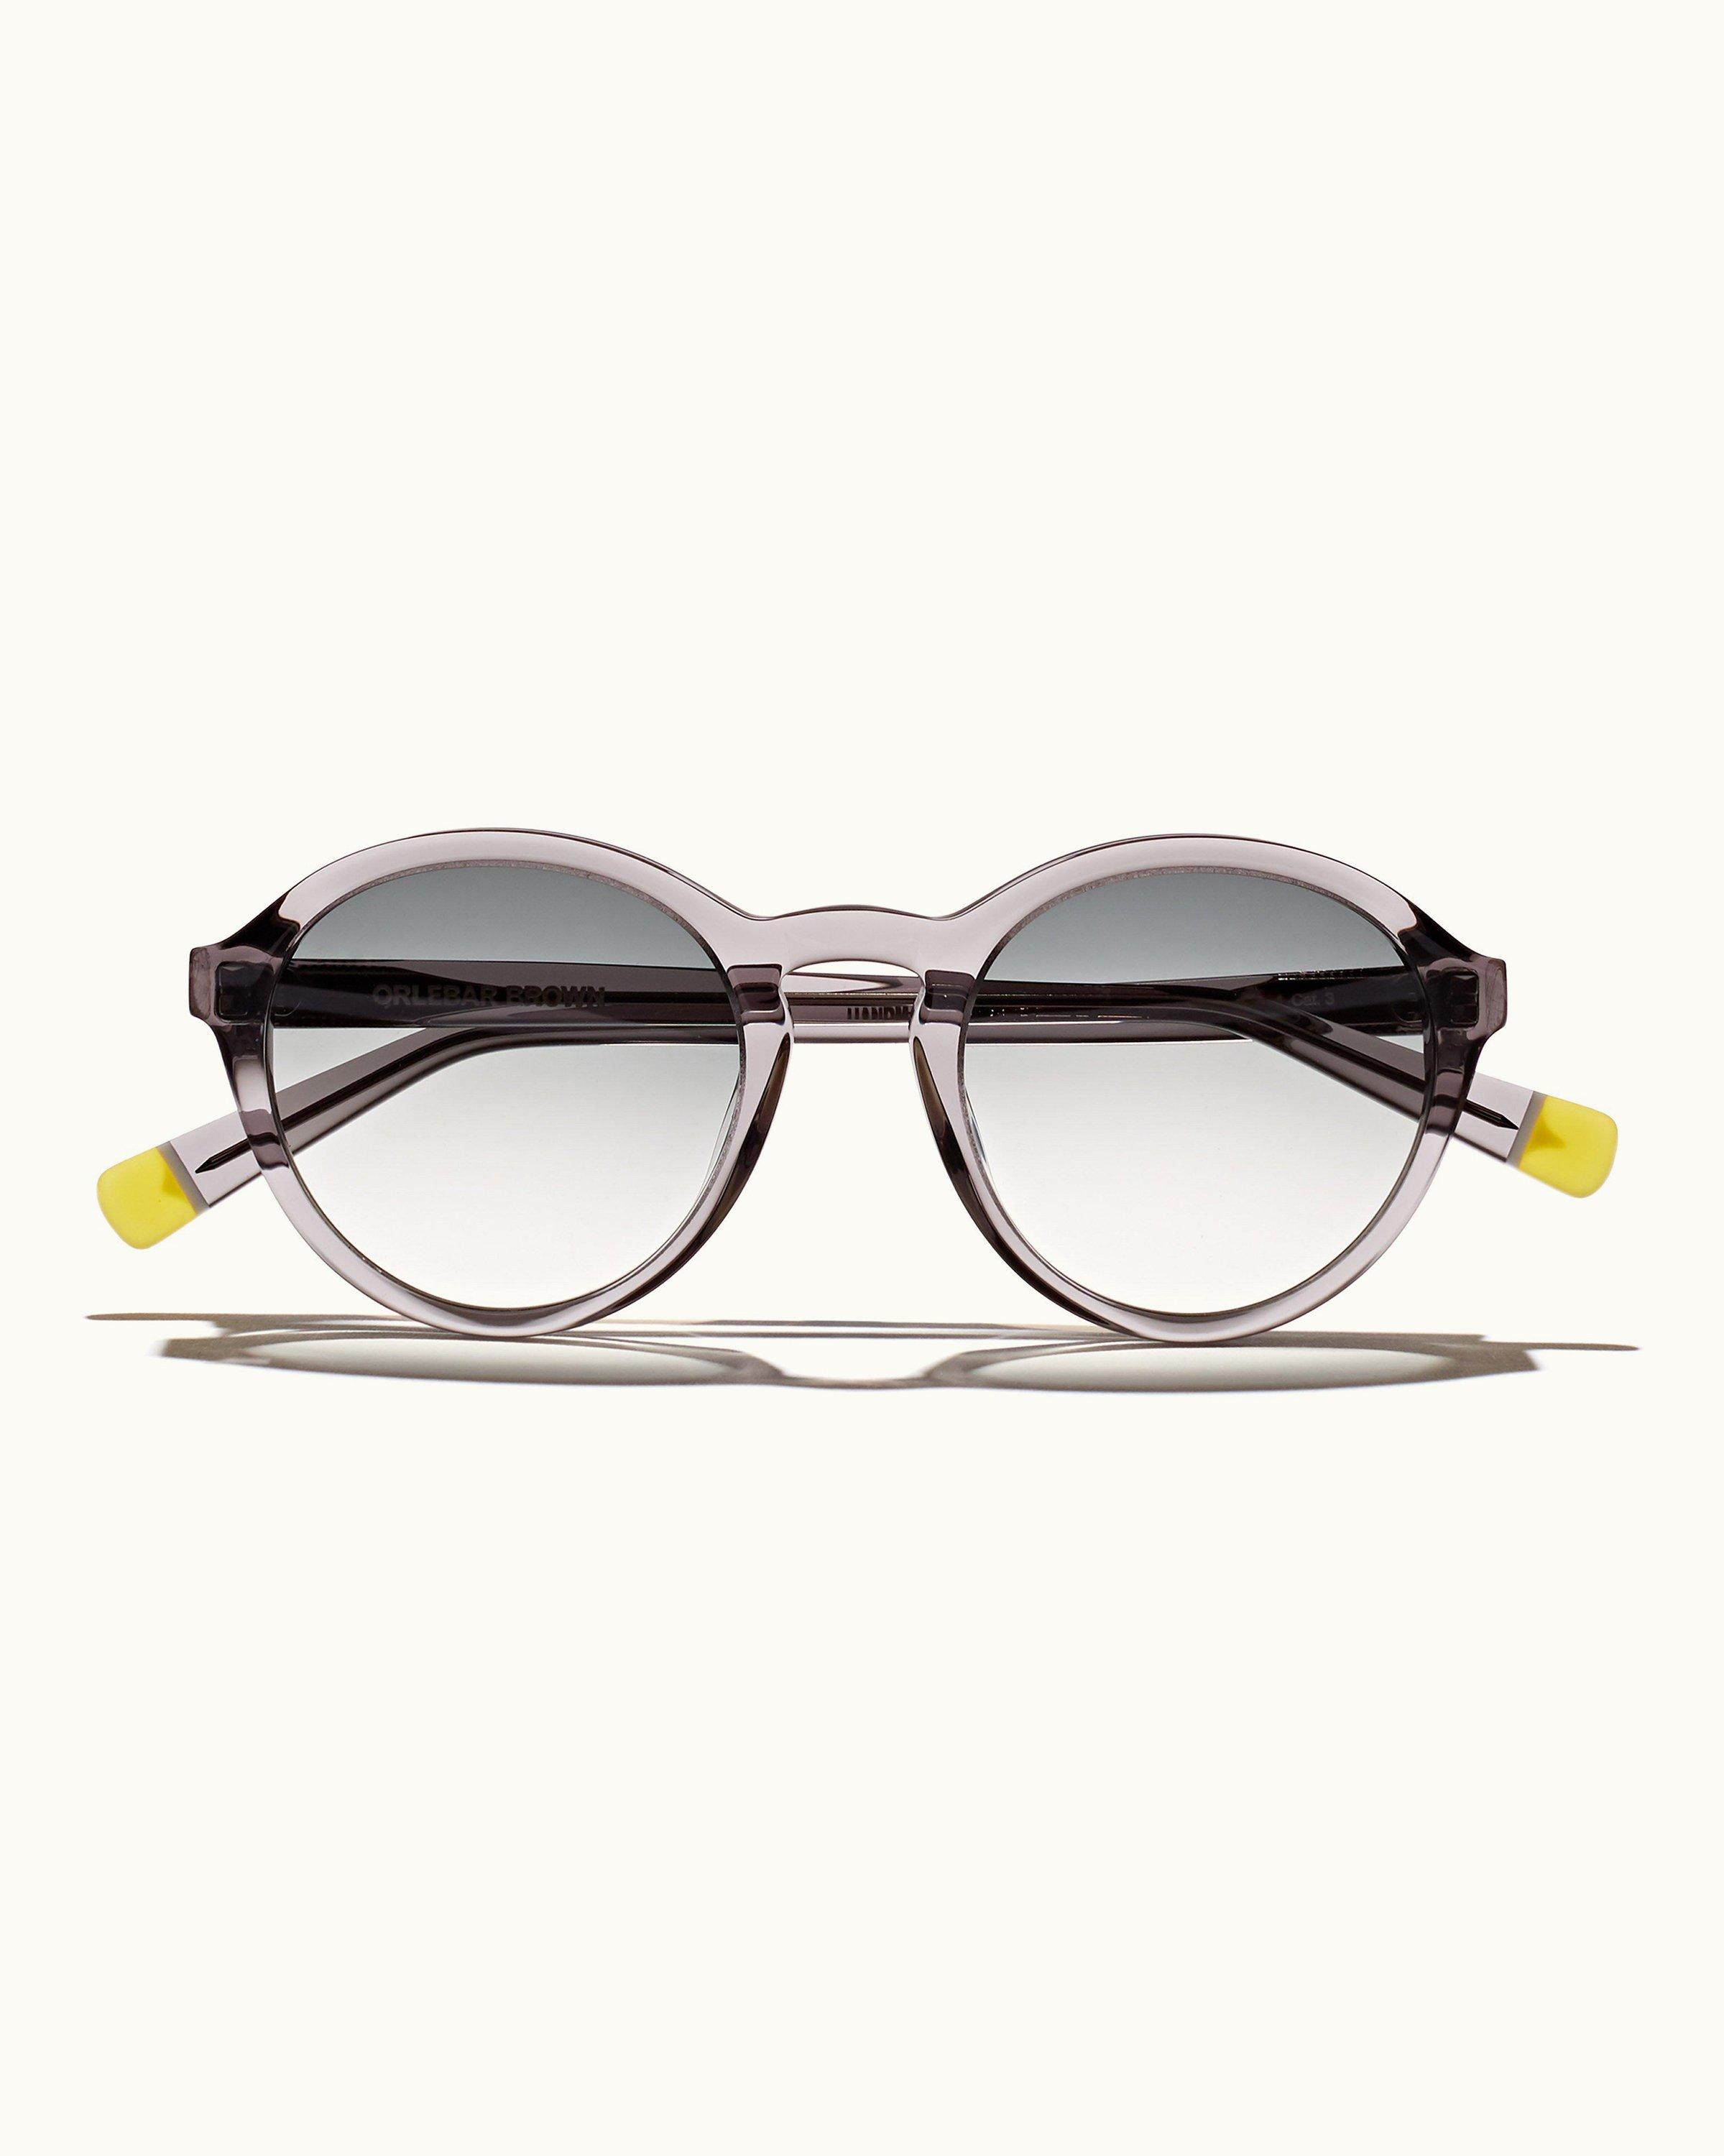 Designer Sunglasses for Men | Orlebar Brown Luxury Eyewear